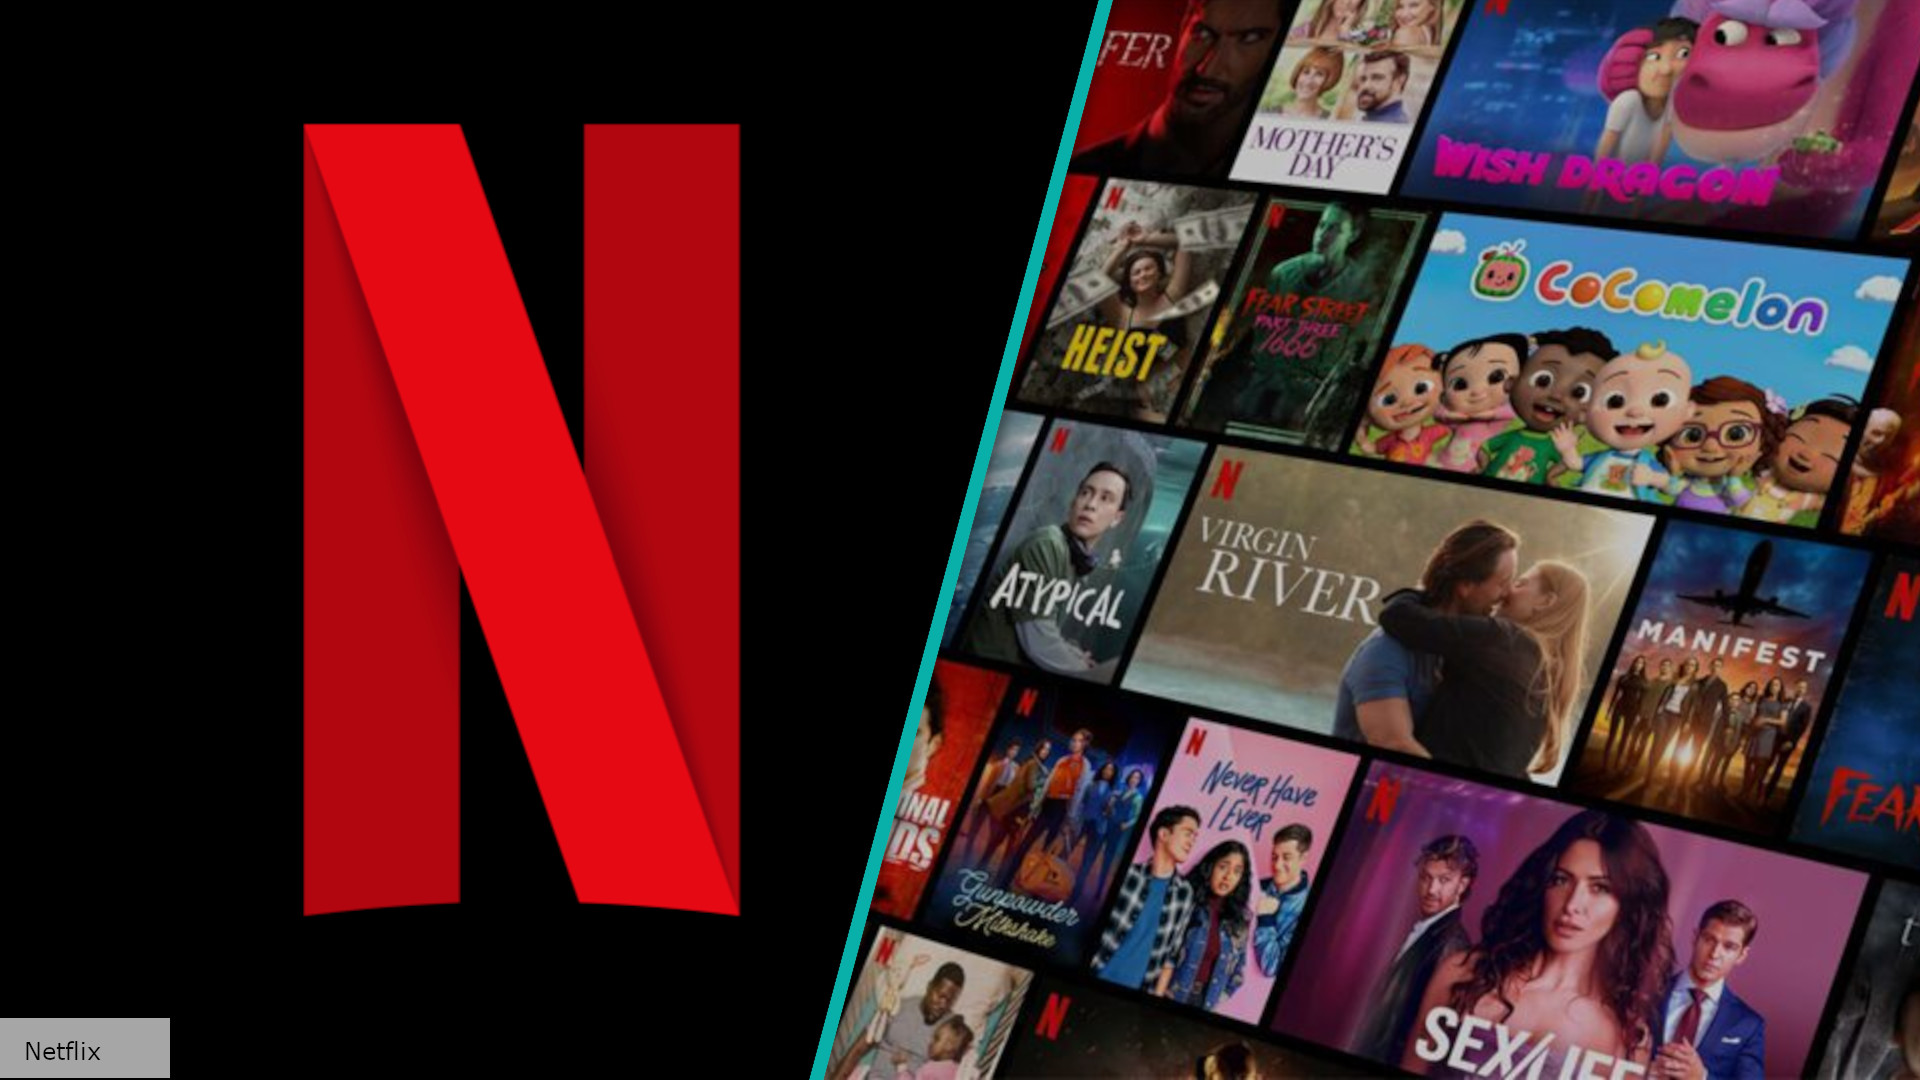 Netflix loses 54 billion in value overnight